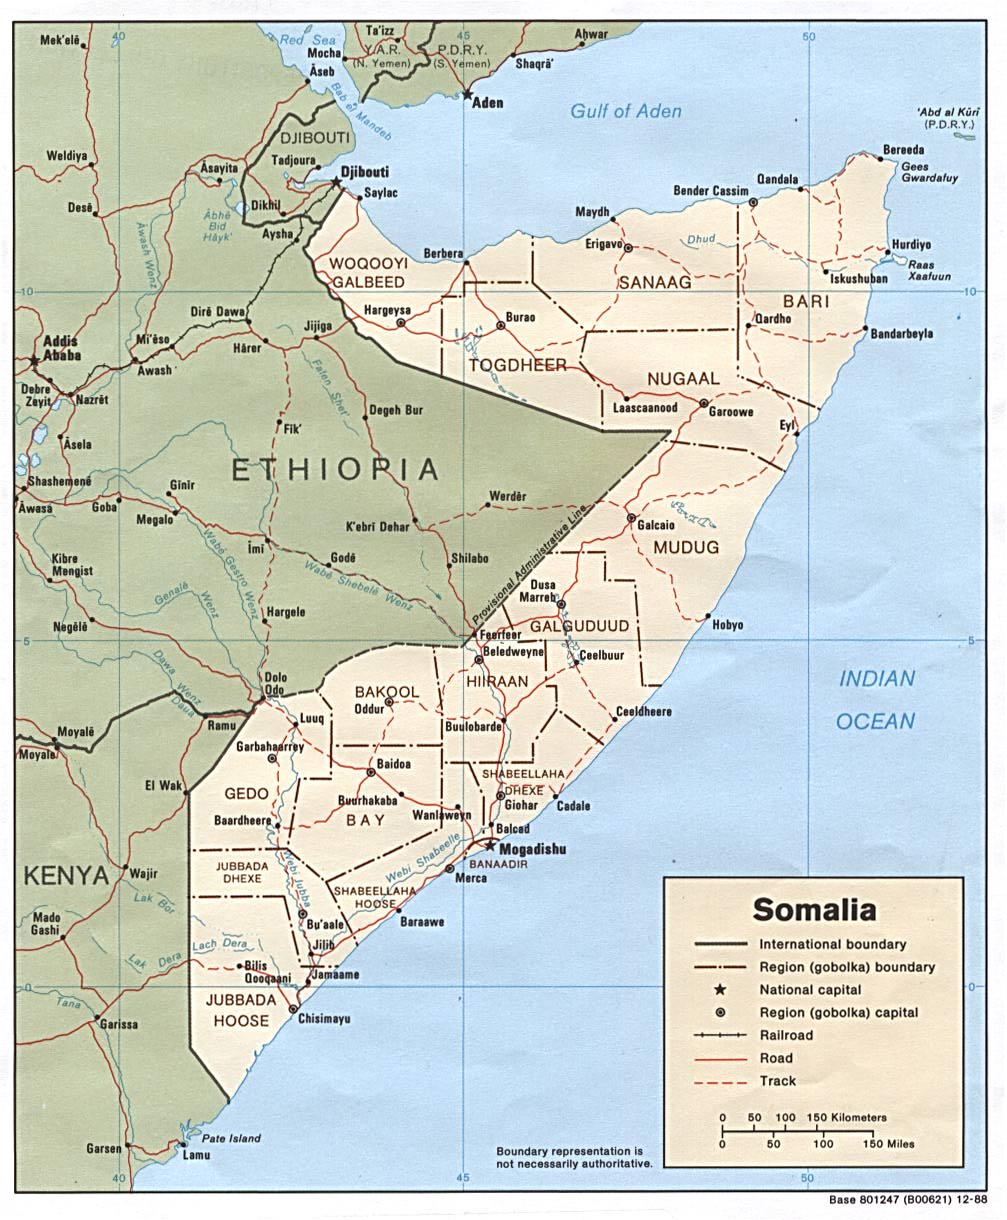 somalia_somalilandia_mapa_cc0-3.jpg